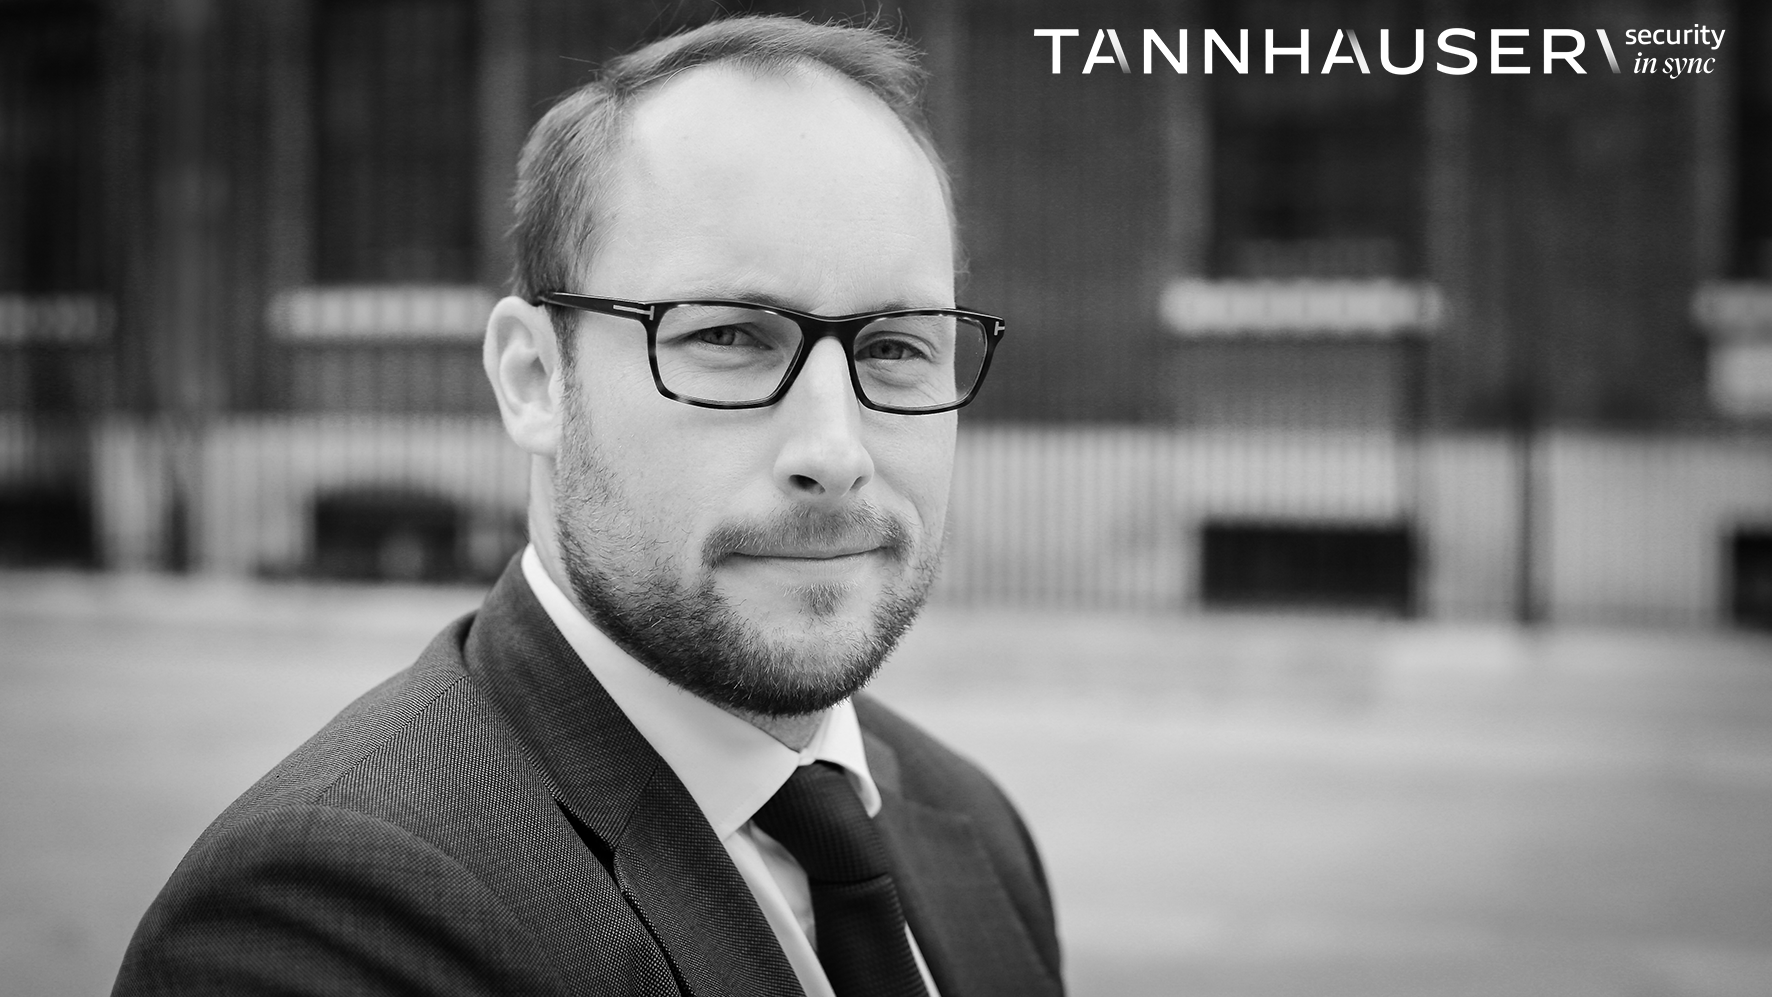 Michael Woods, Founder & Managing Director of Tannhauser